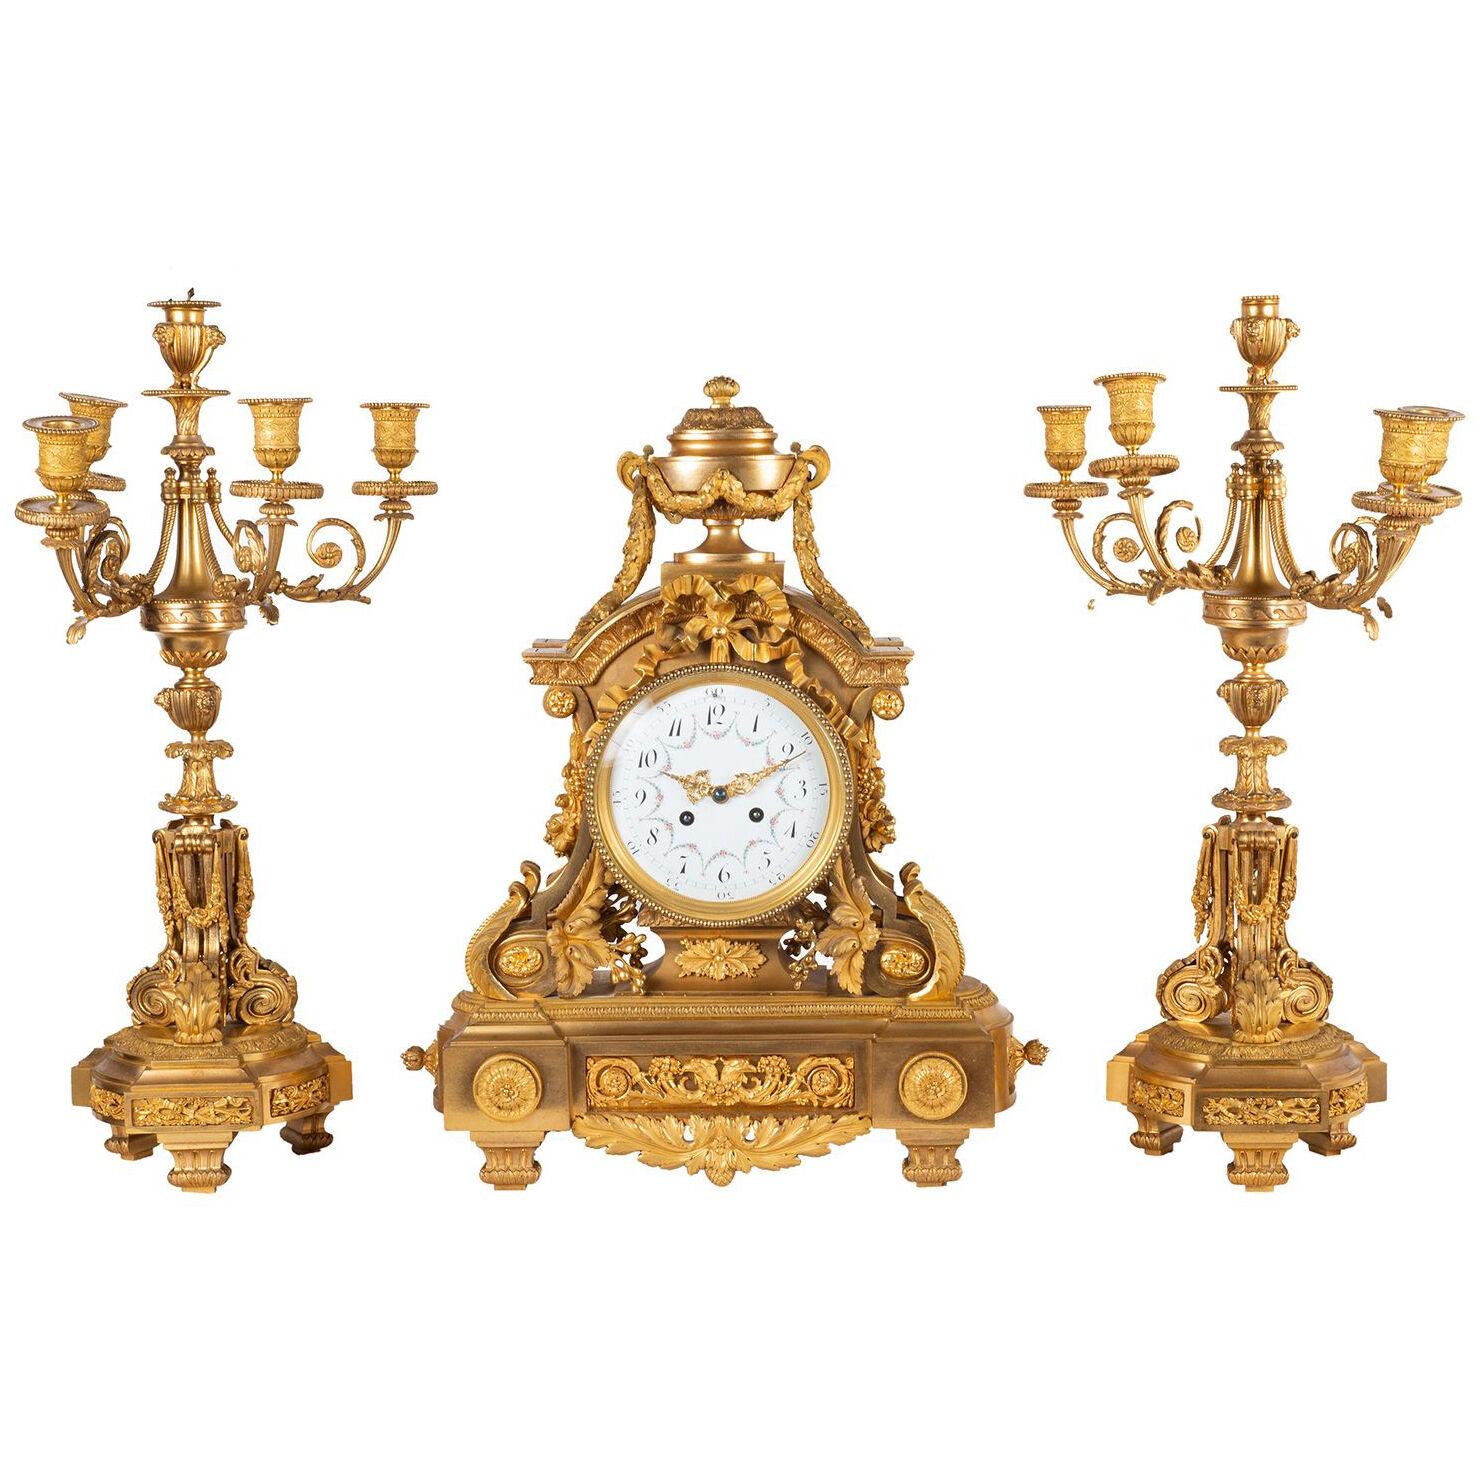 19th Century French, Louis XVI style clock set.